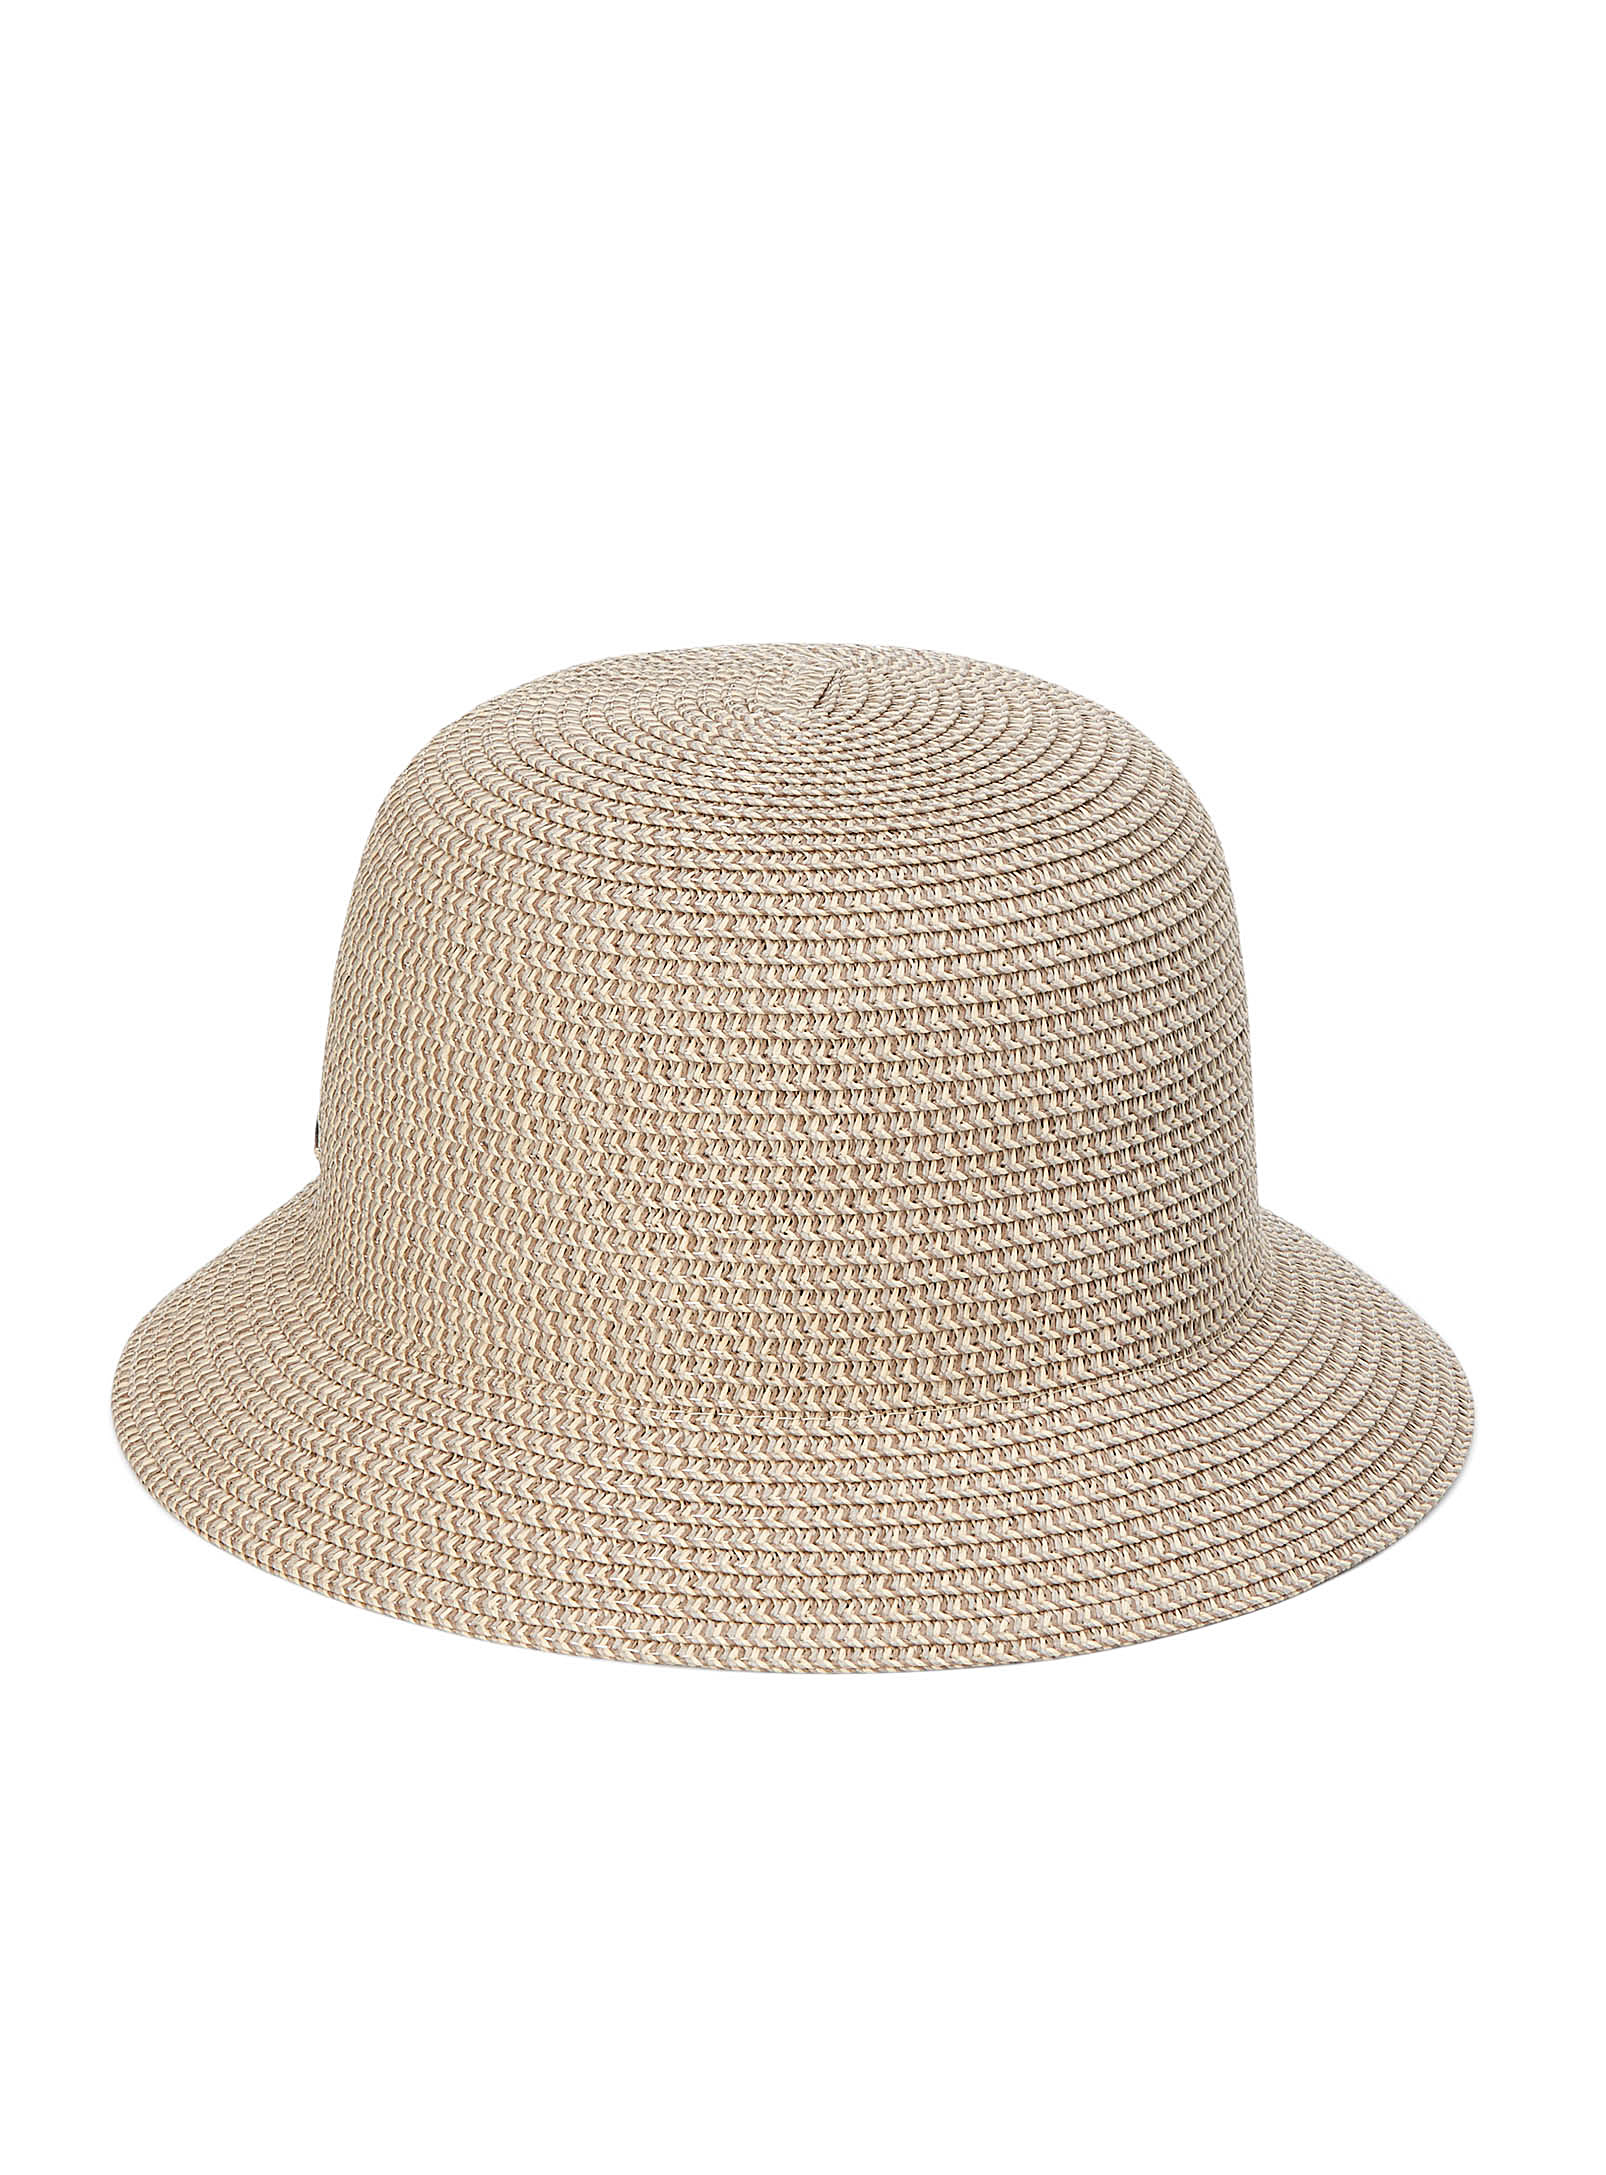 Canadian Hat Monochrome Cloche In Cream Beige